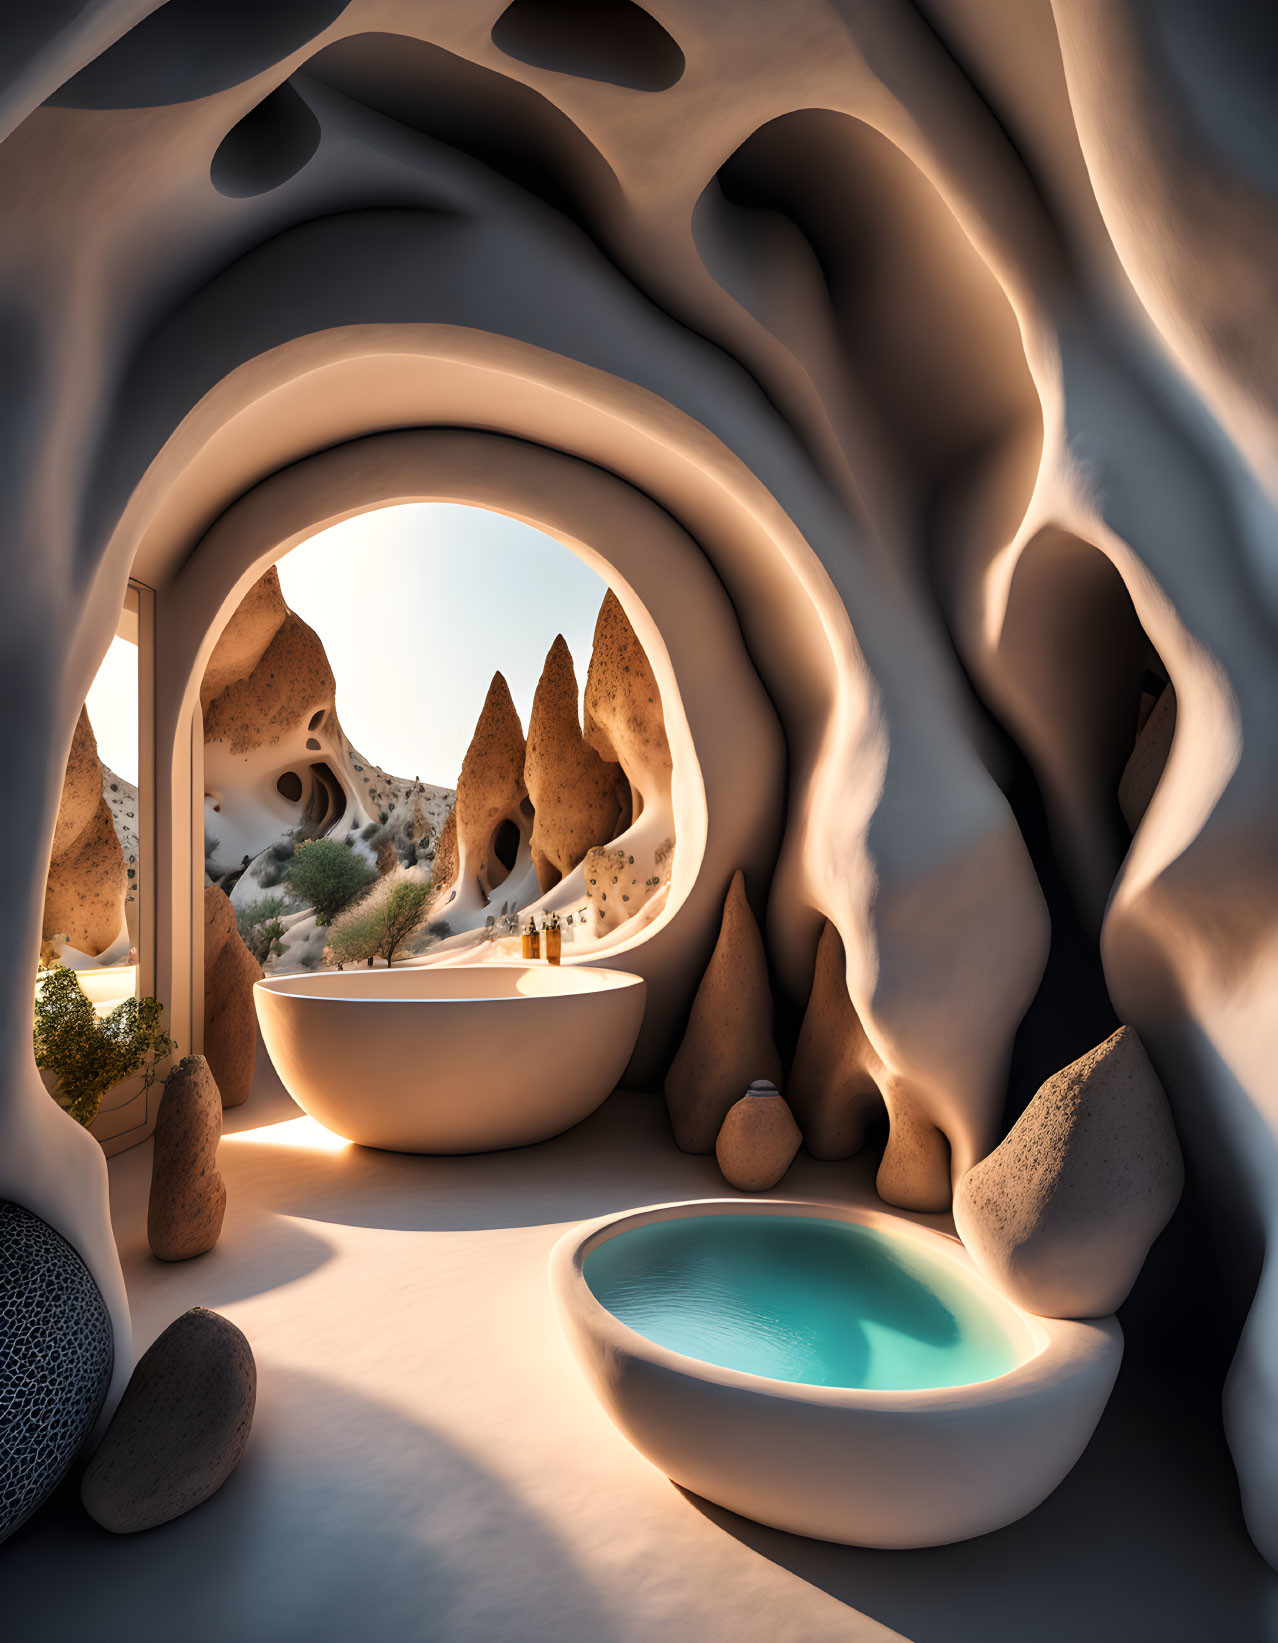 Unique Rock Formations Overlooking Desert Landscape in Surreal Cave Interior